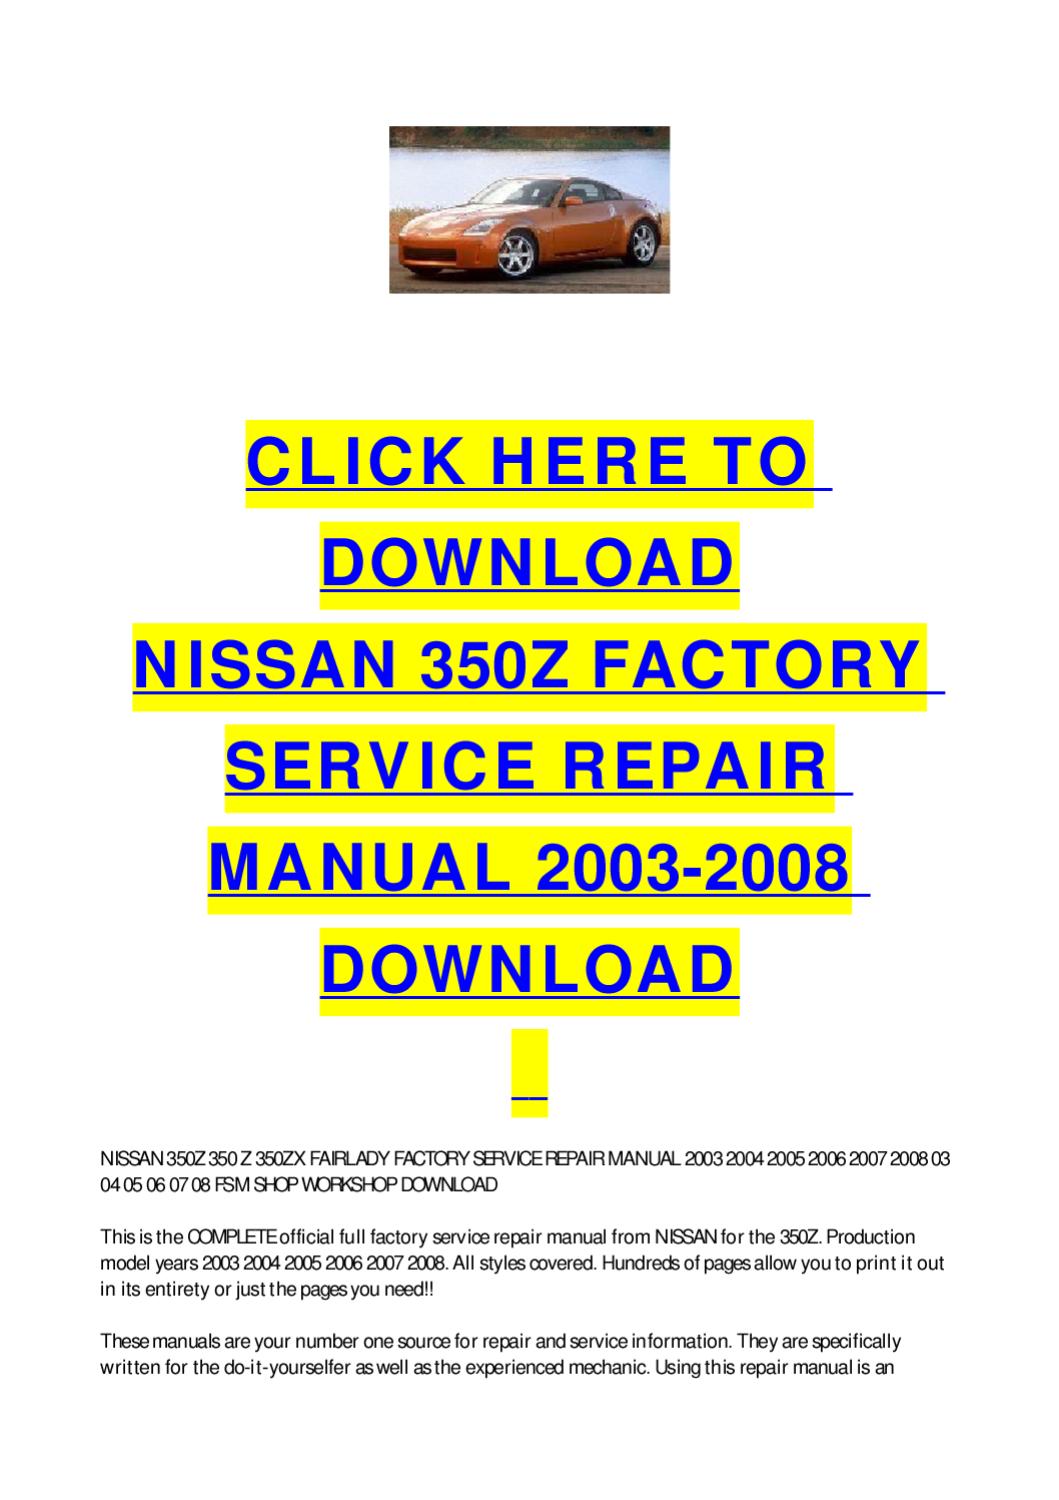 2005 nissan 350z service manual